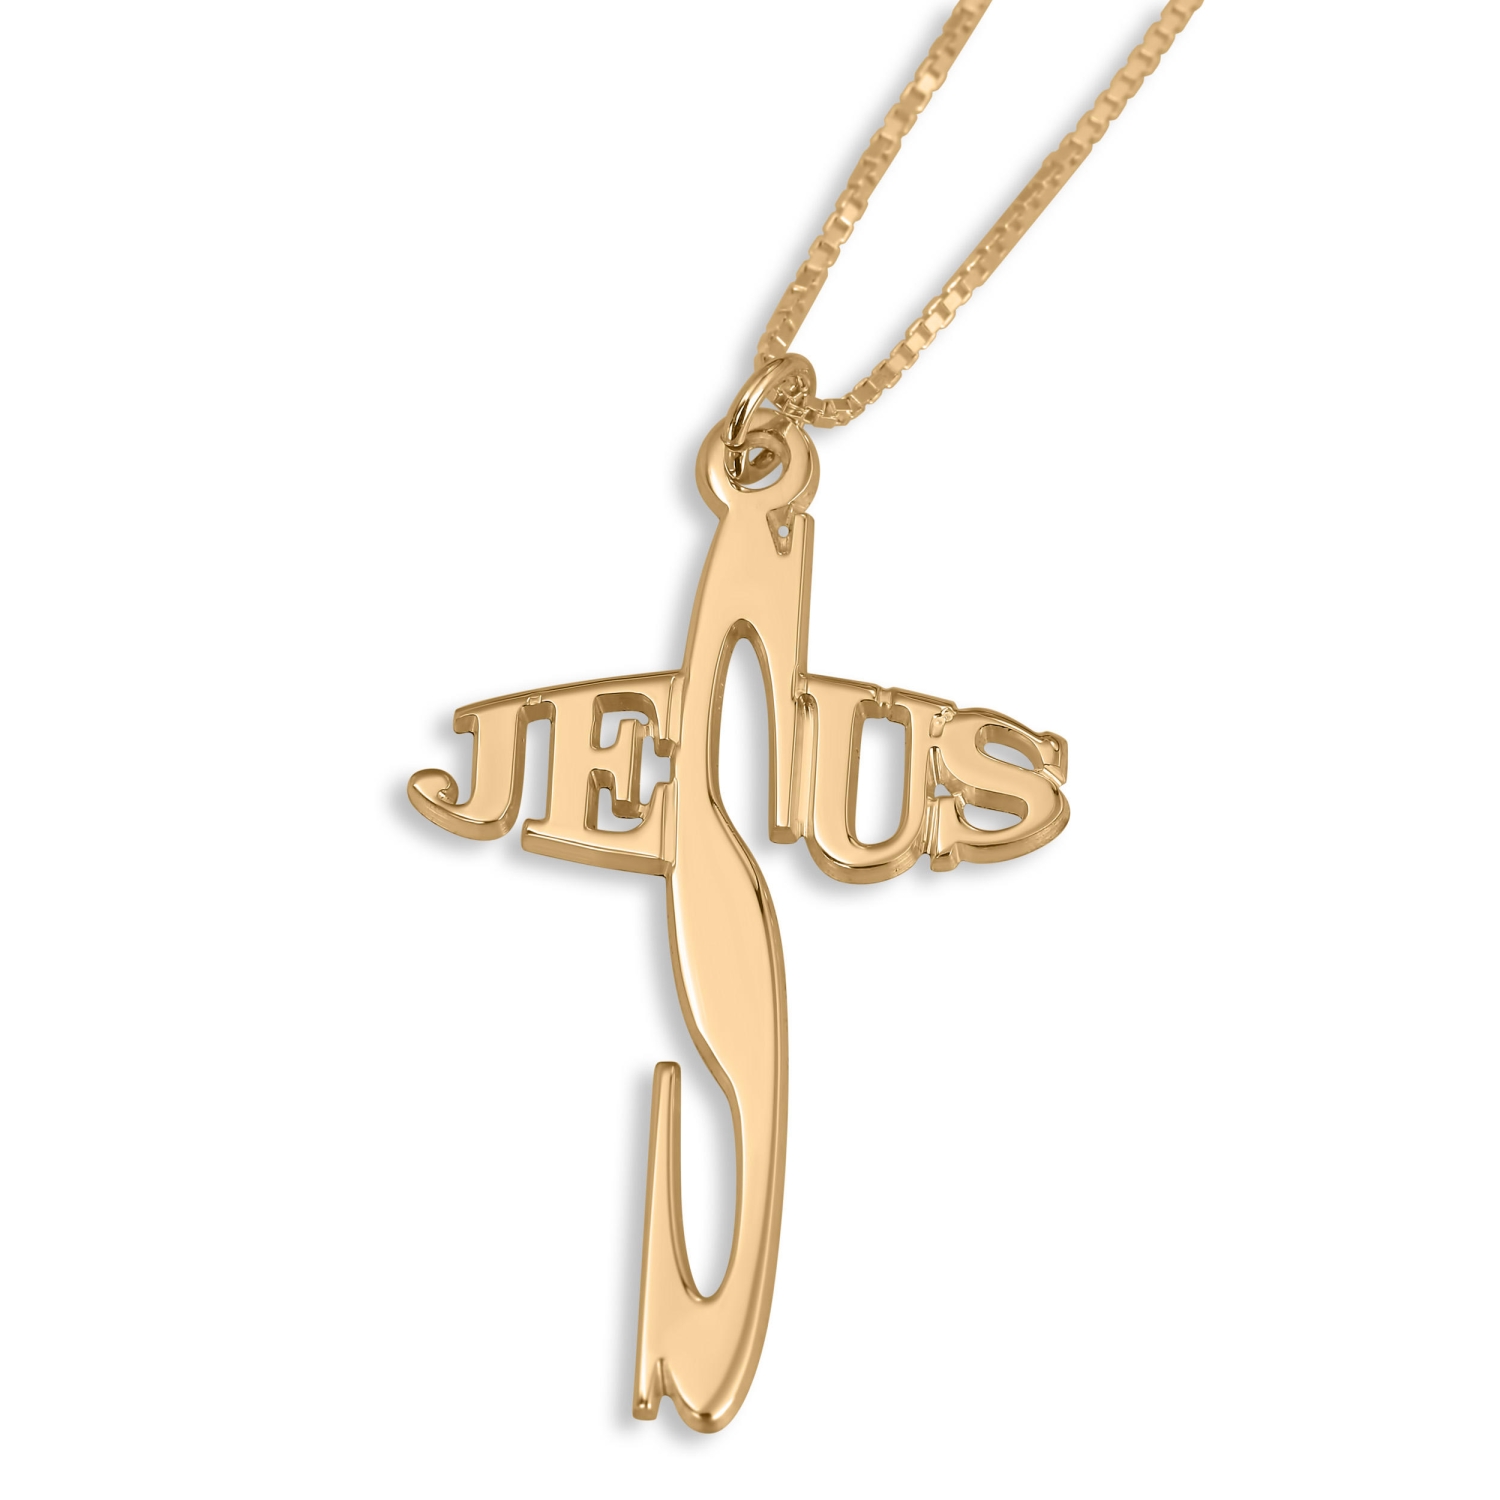 24k Gold Gf Womens Mens Jesus Crucifix Necklace Cross Pendant Chain Ripple  7 Days No Reason To Refund - Pendants - AliExpress